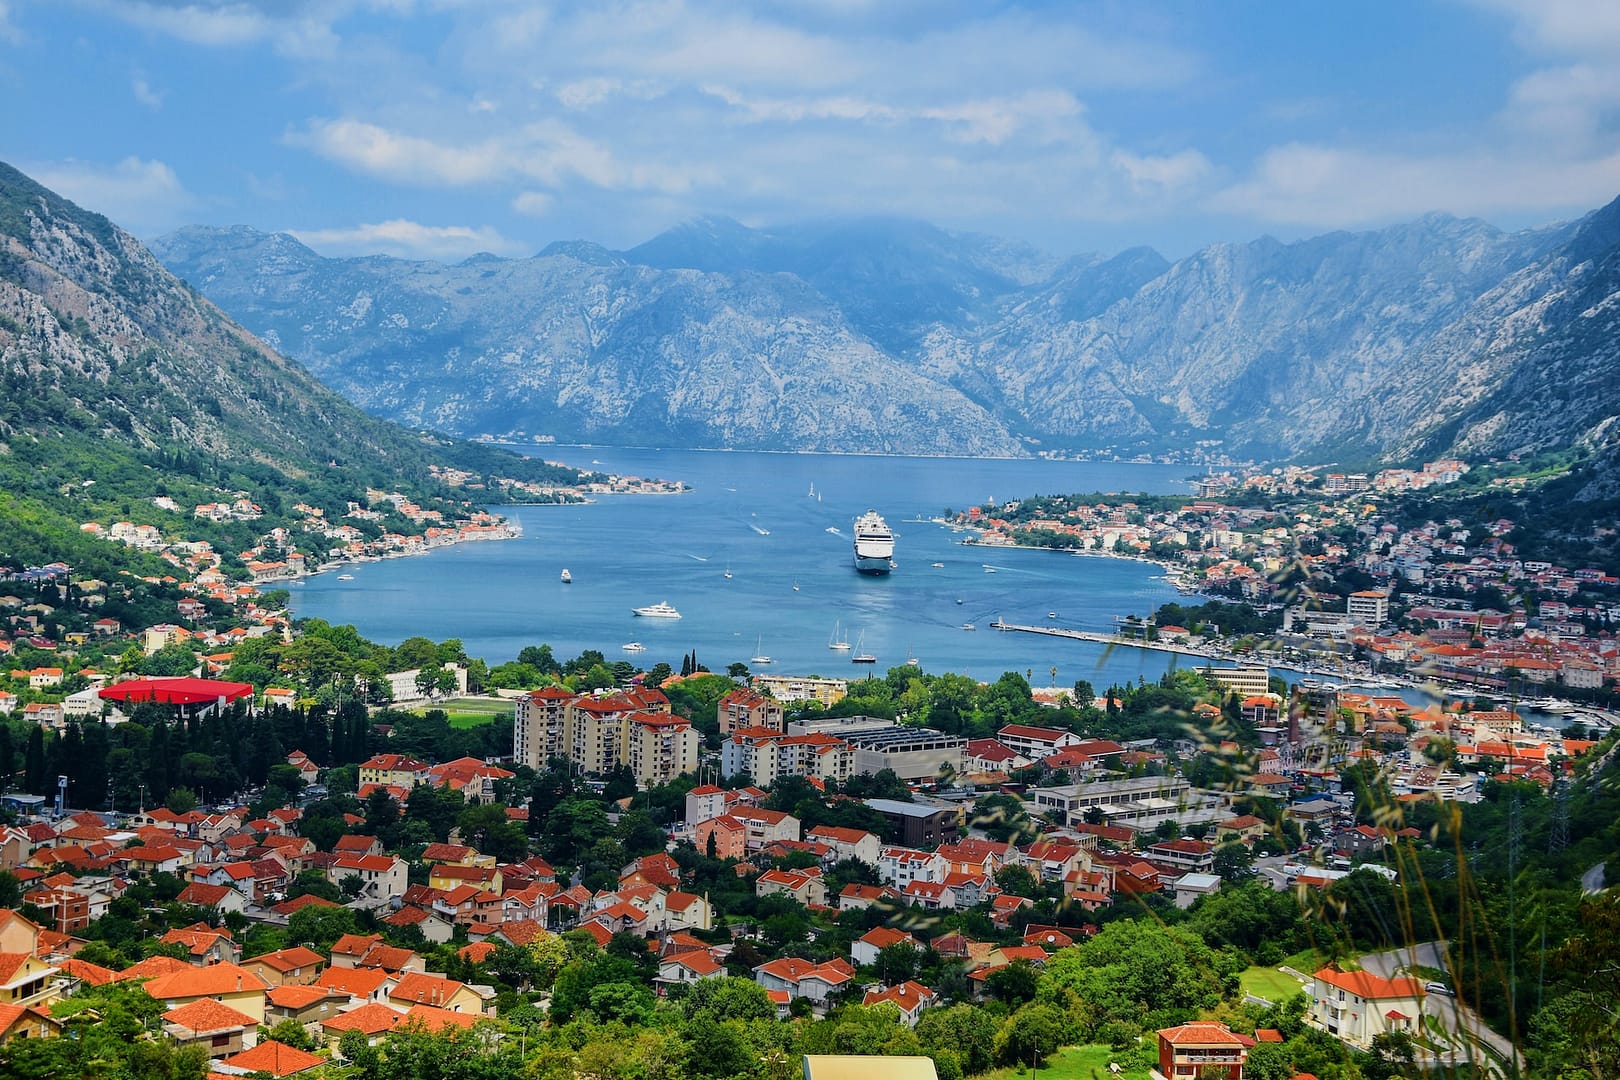 Montenegro has 4 UNESCO world heritage sites, fun facts about Unesco